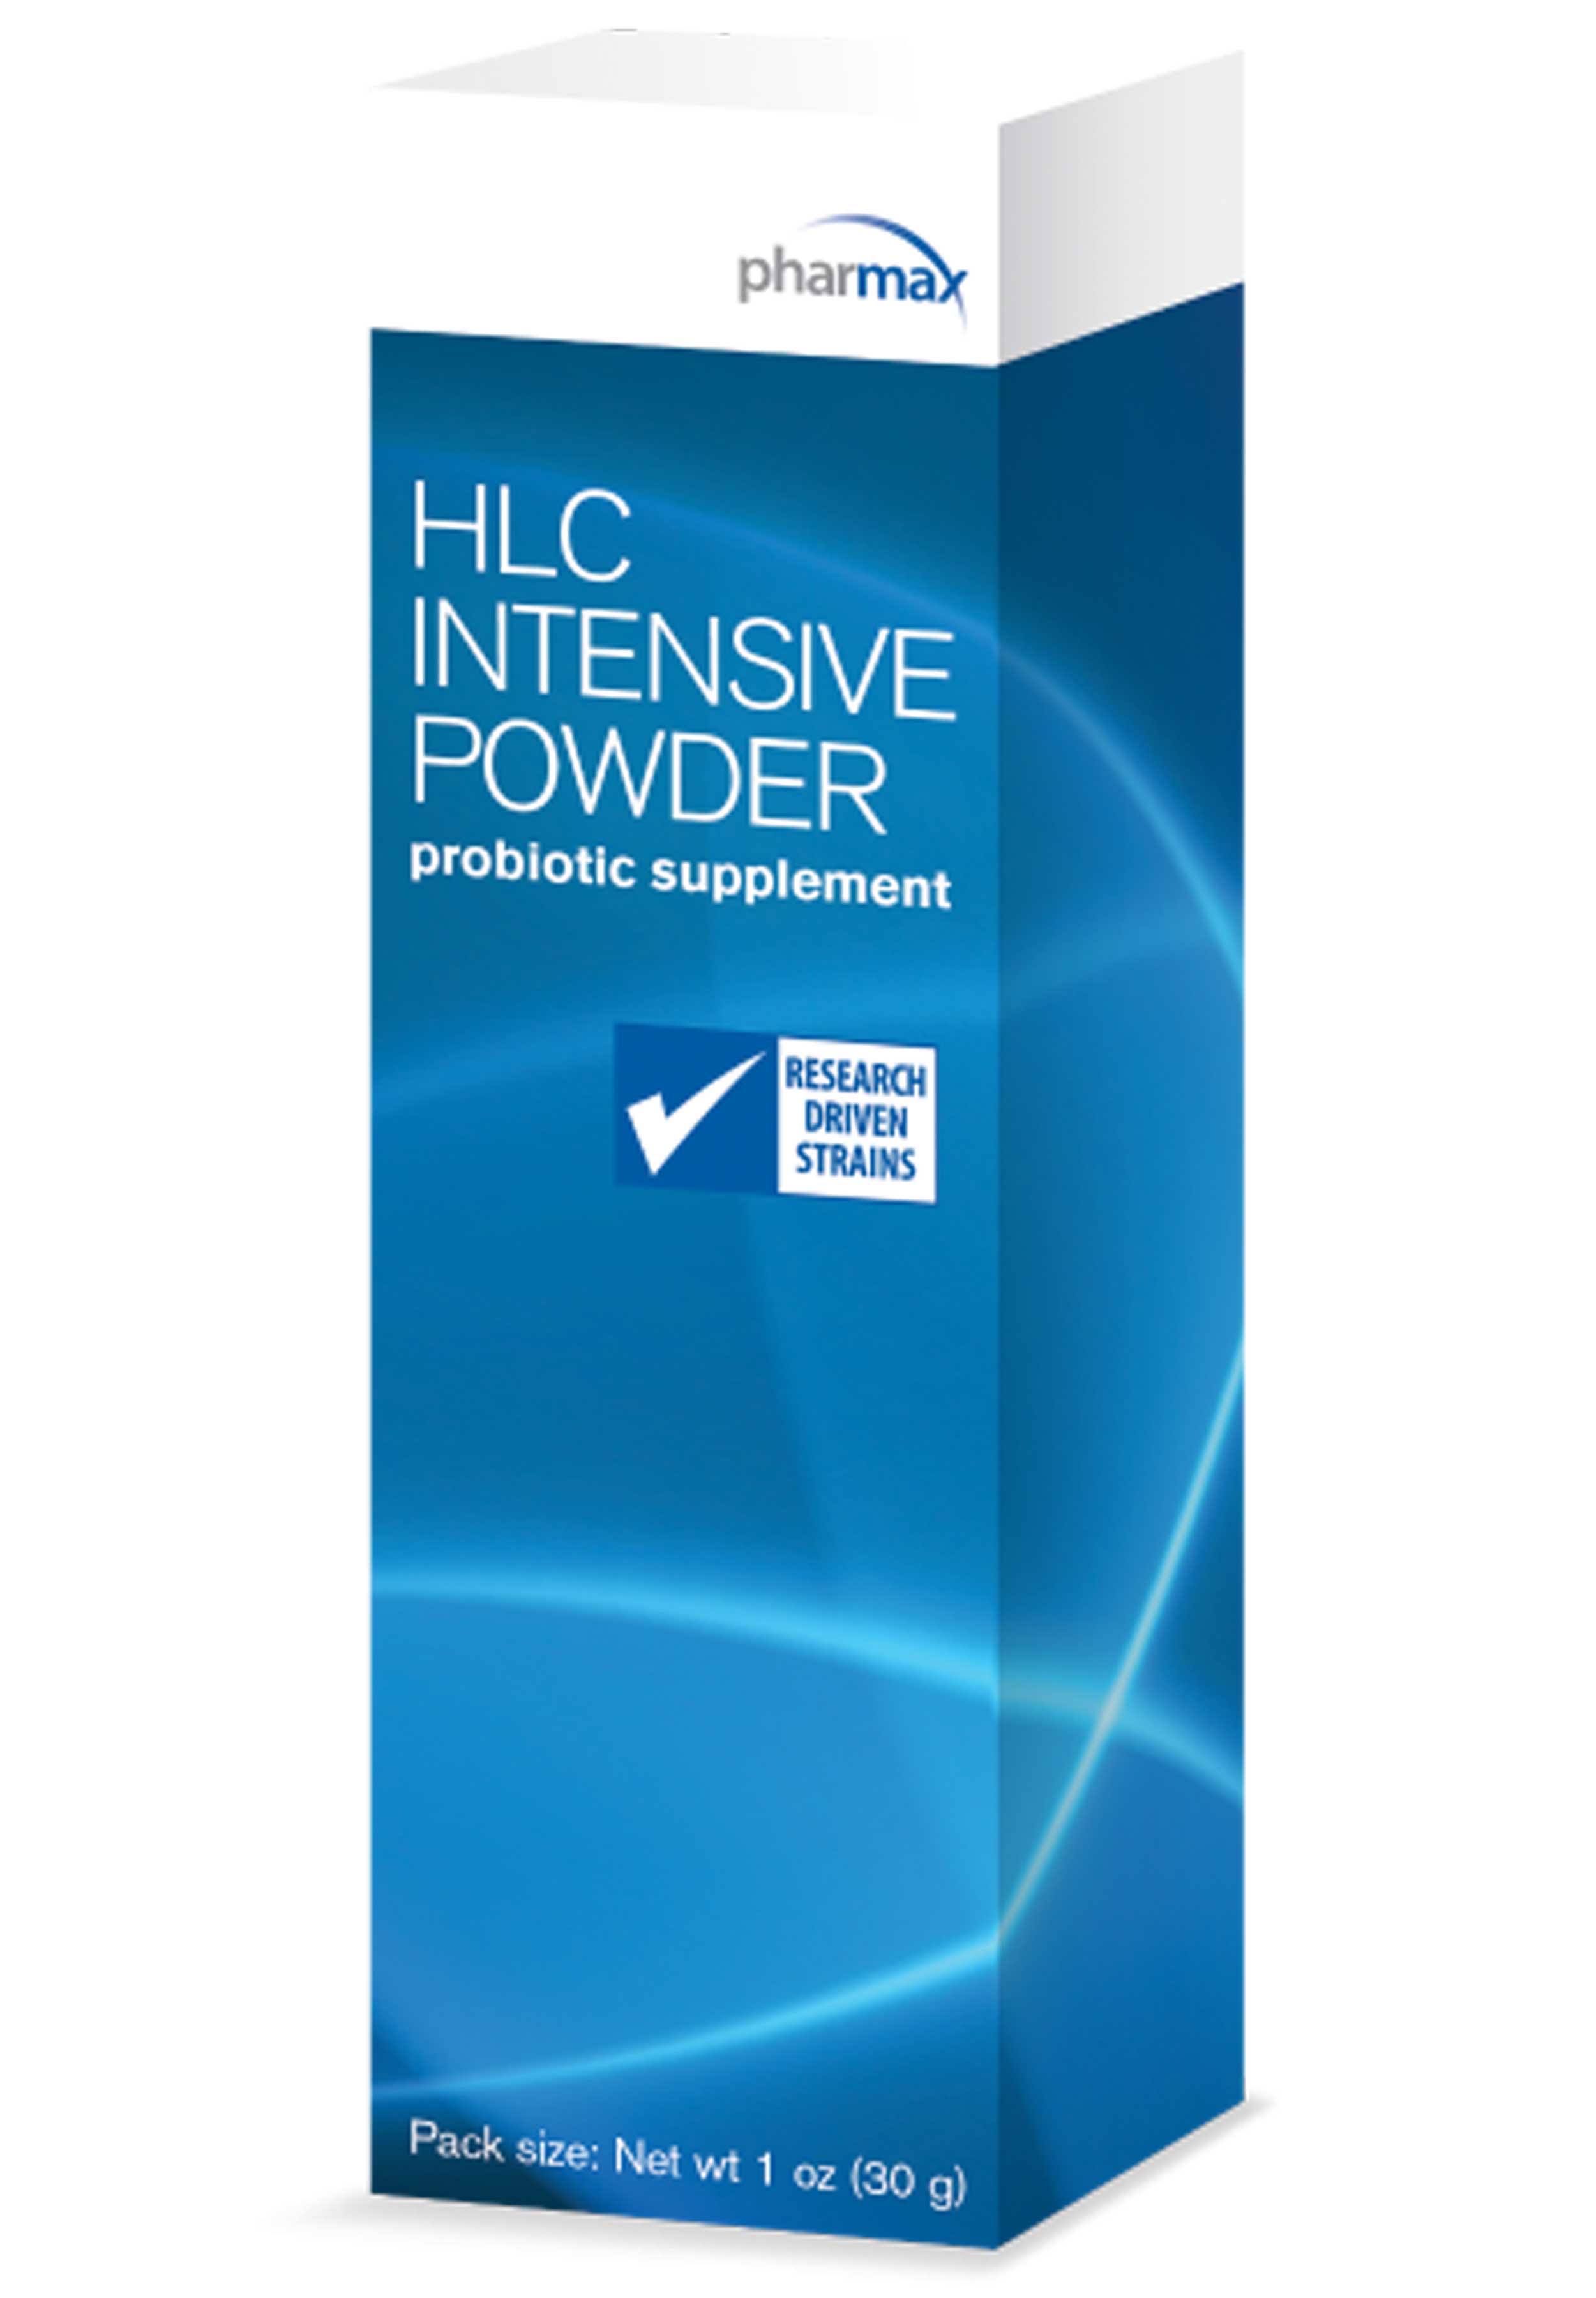 Pharmax HLC Intensive Capsules